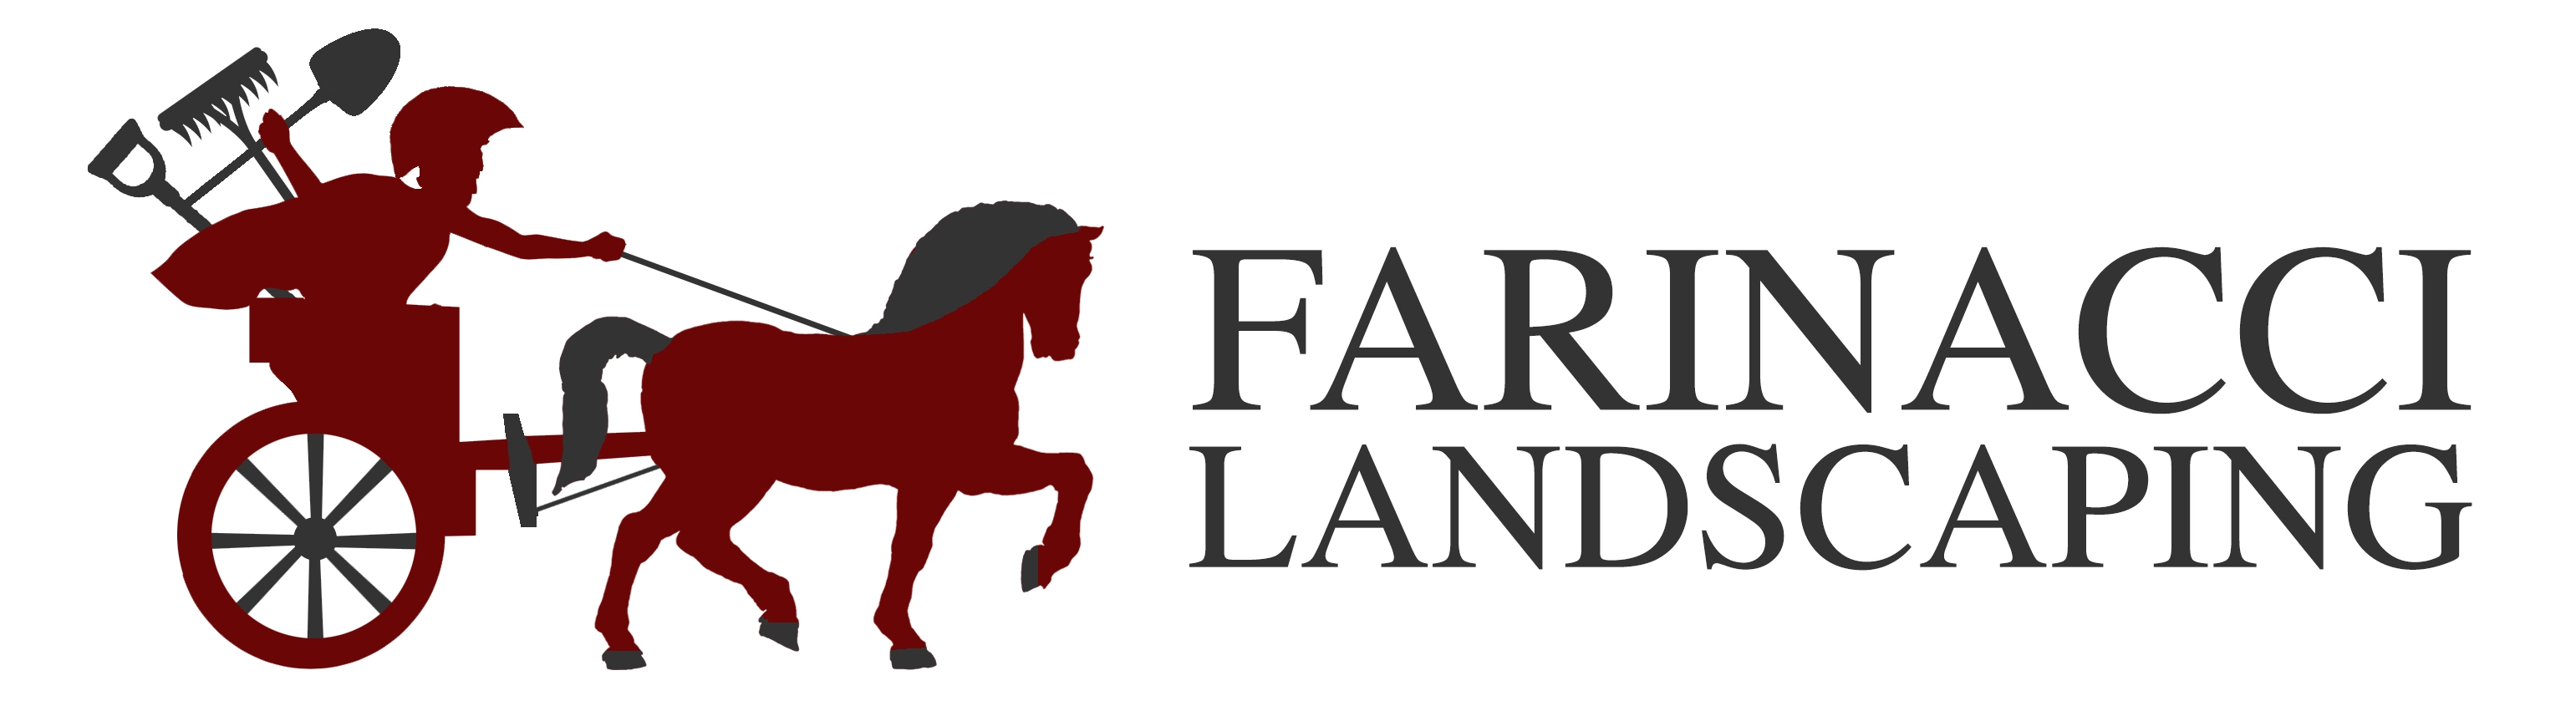 Farinacci Landscaping Logo